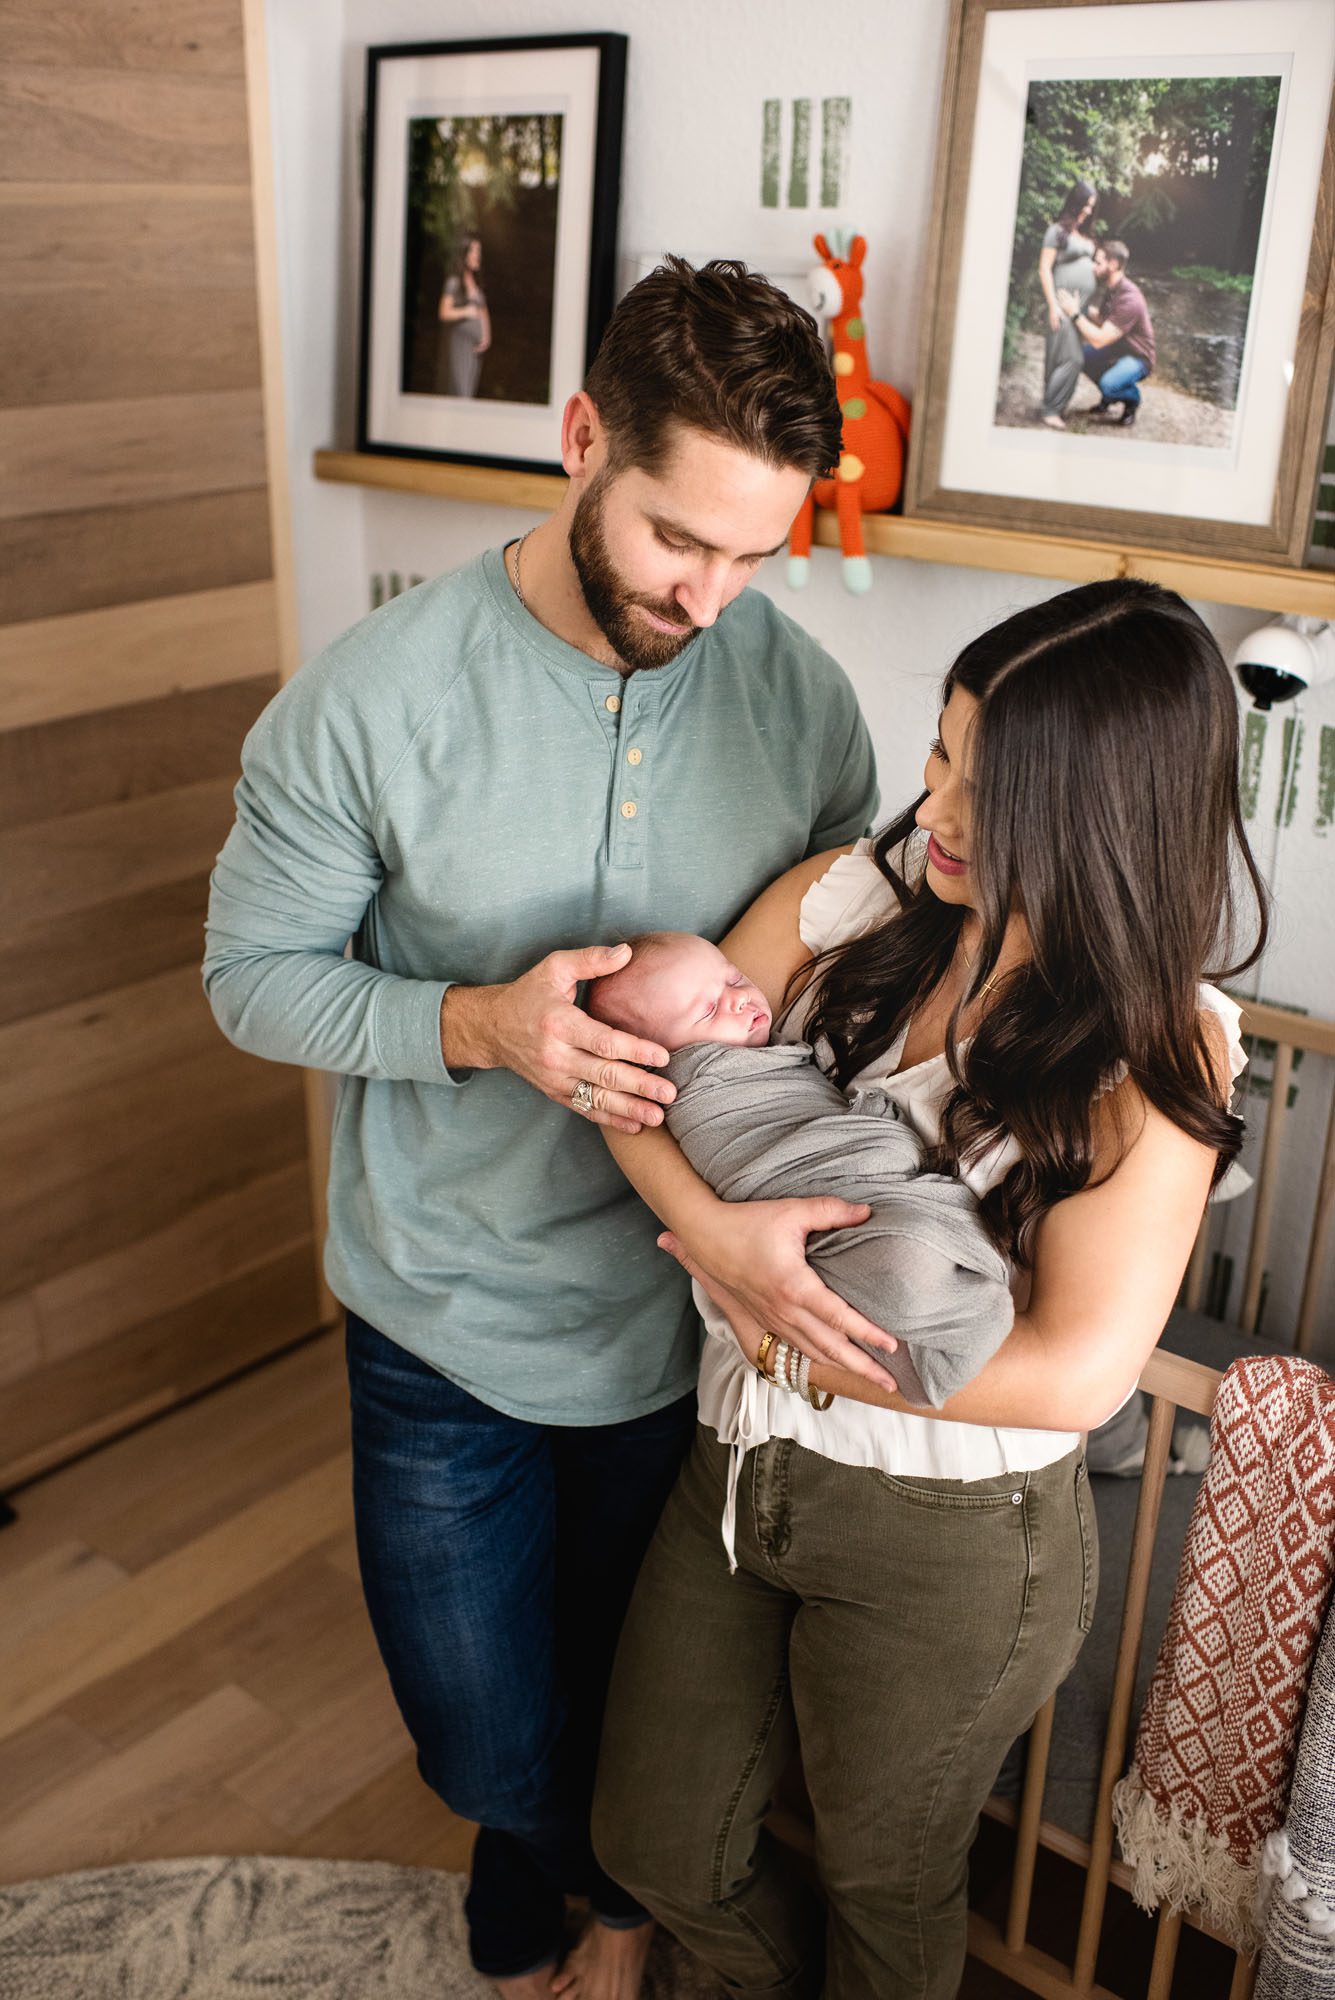 San Antonio Newborn Photographer, Couple holding newborn baby in nursery